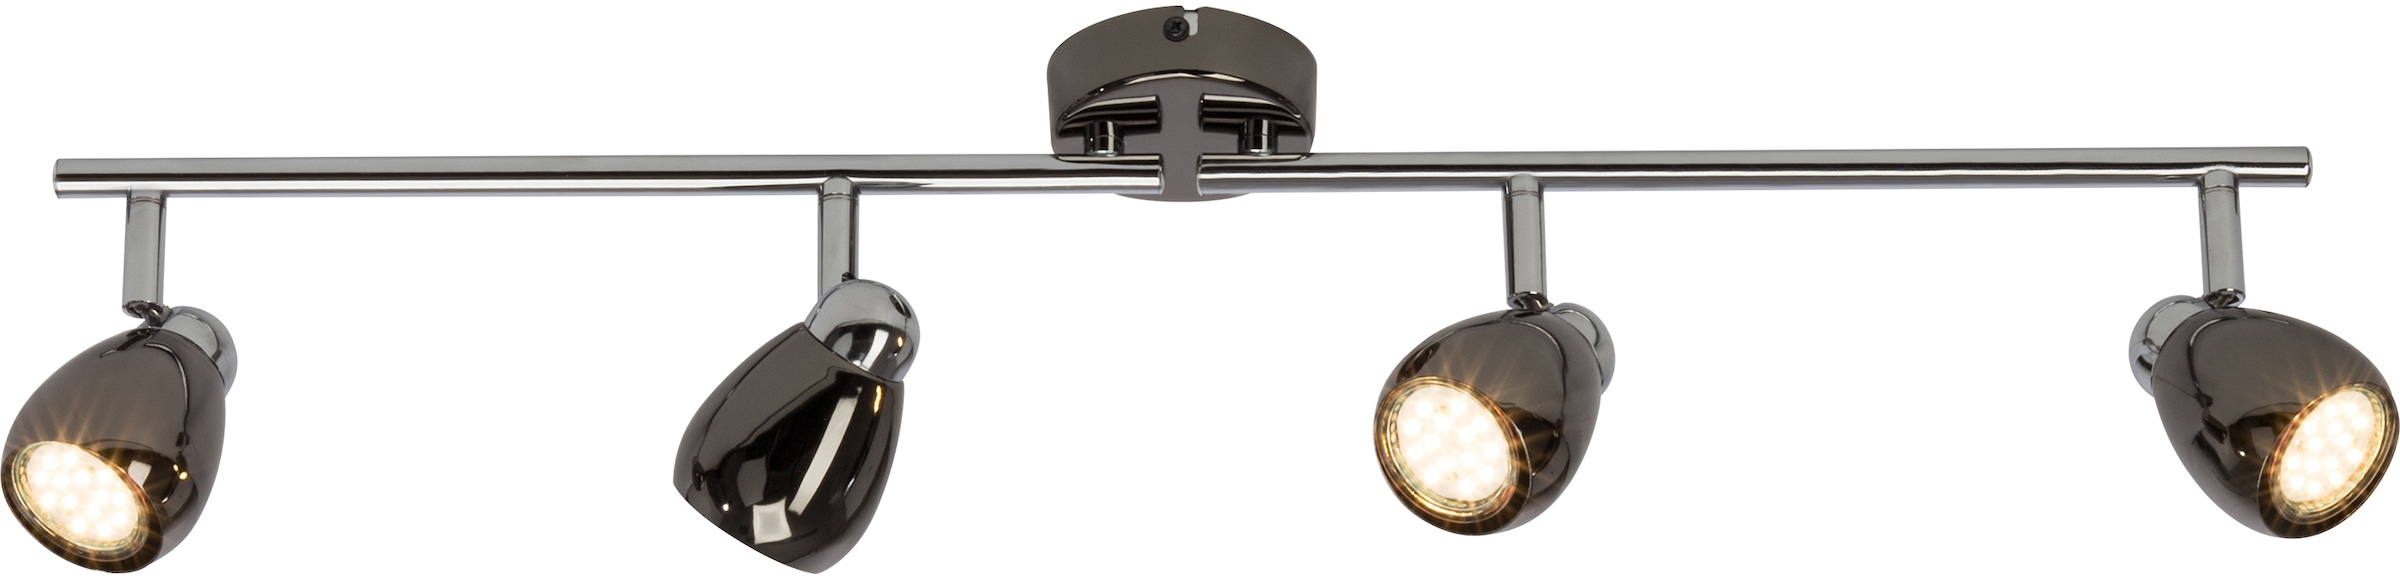 Brilliant LED Deckenstrahler »Milano«, 4 flammig-flammig, 71 cm Breite, 4 x GU10 Leuchtmittel inklusive, Metall, schwarz chrom